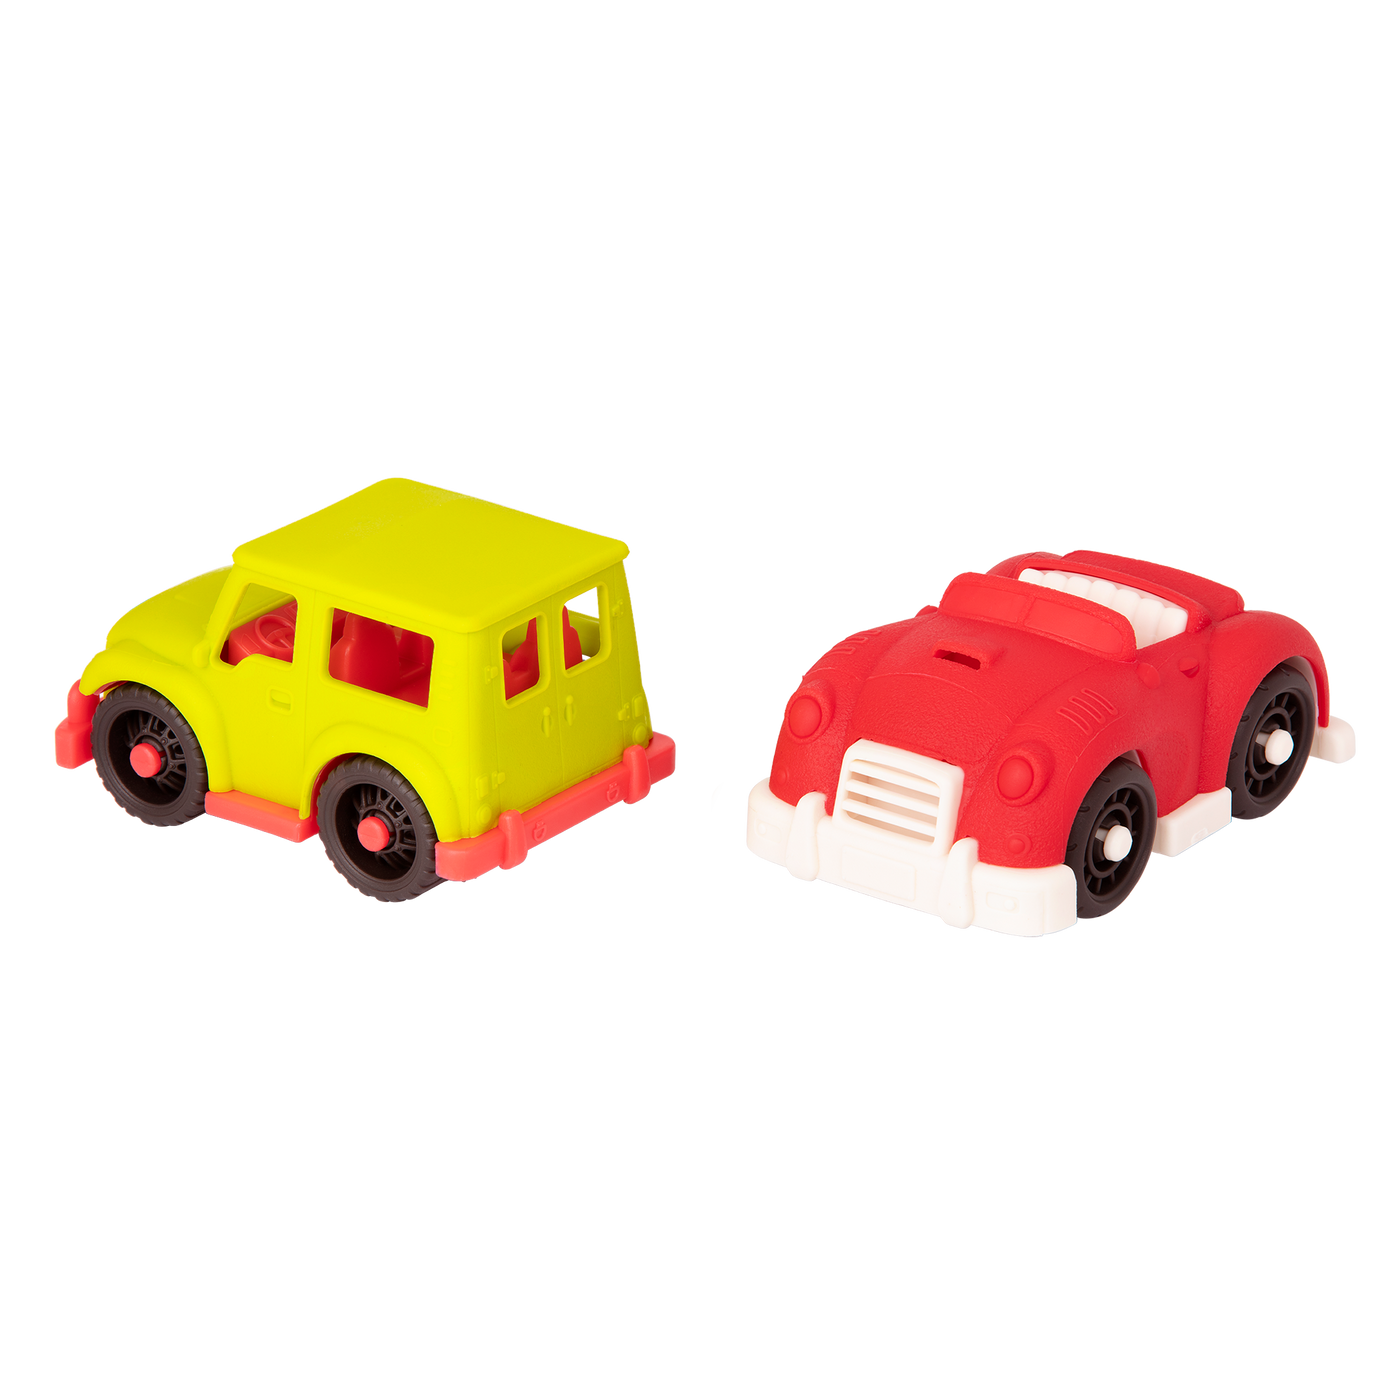 Happy Cruisers - 6 mini-véhicules